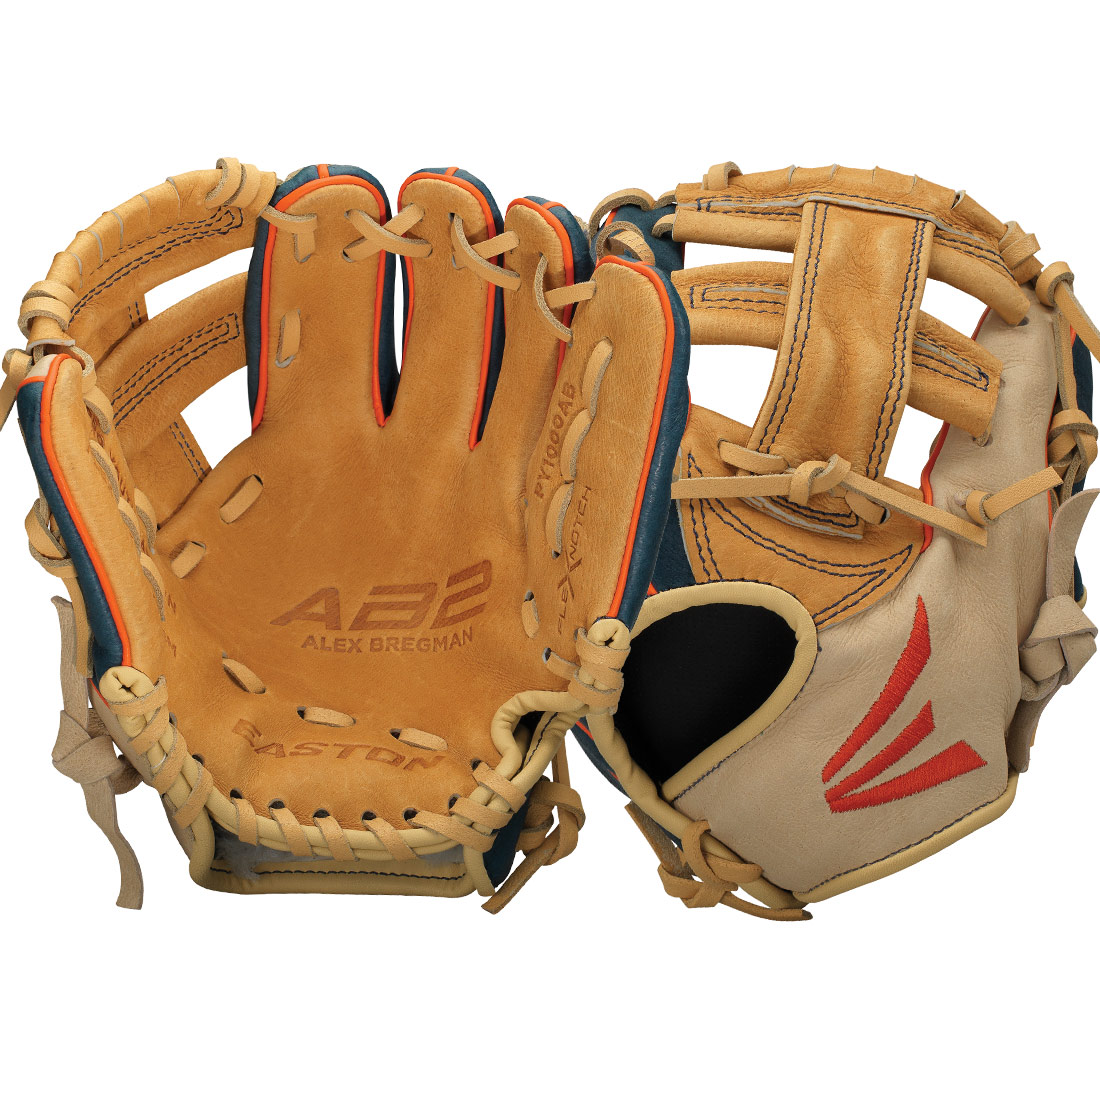 Easton Alex Bregman Professional Youth Baseball Glove 10\" PY1000